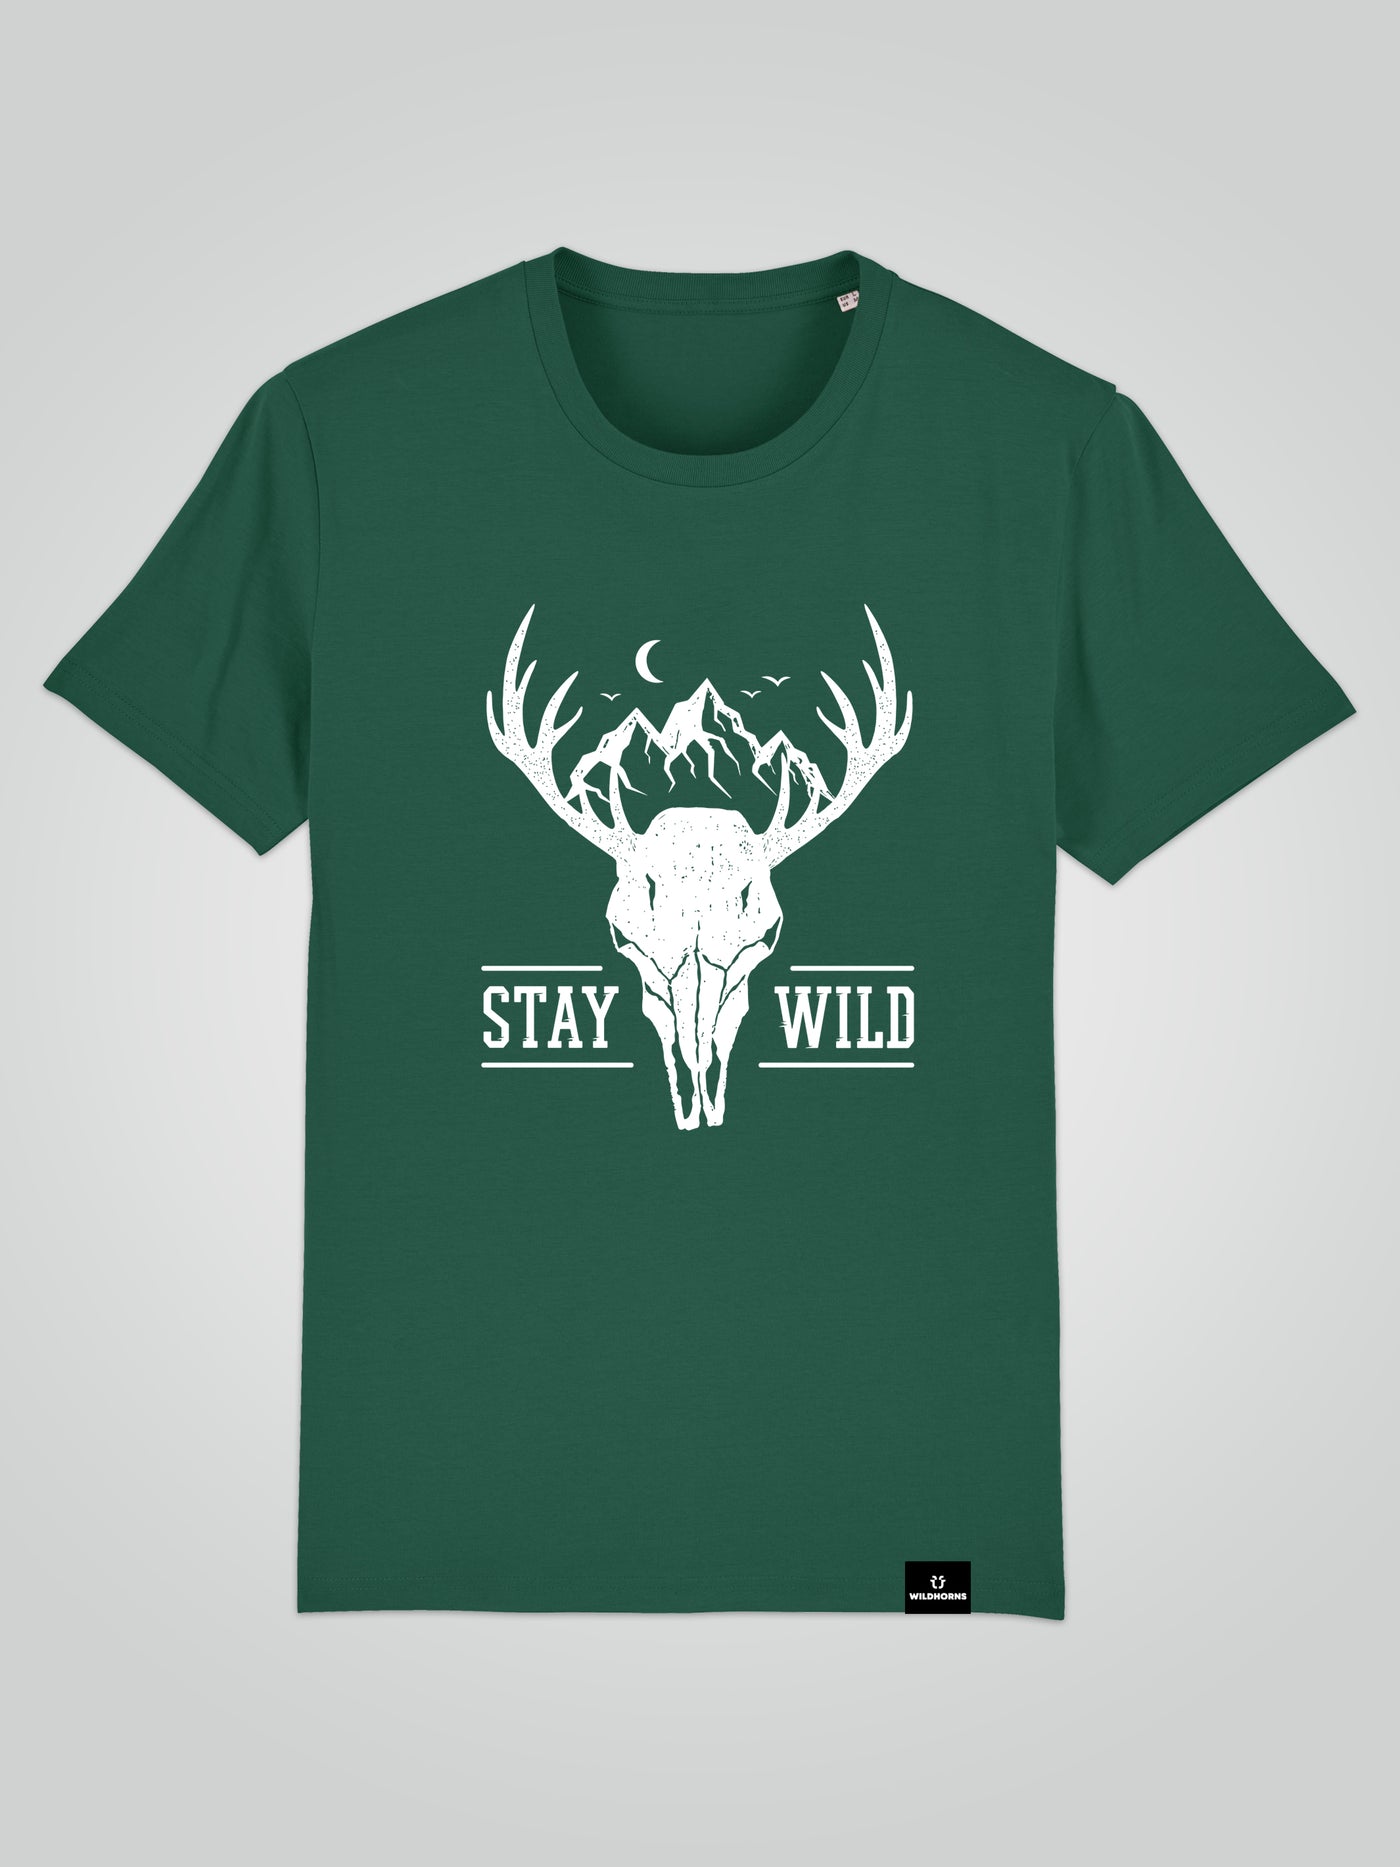 Stay Wild - Unisex T-Shirt